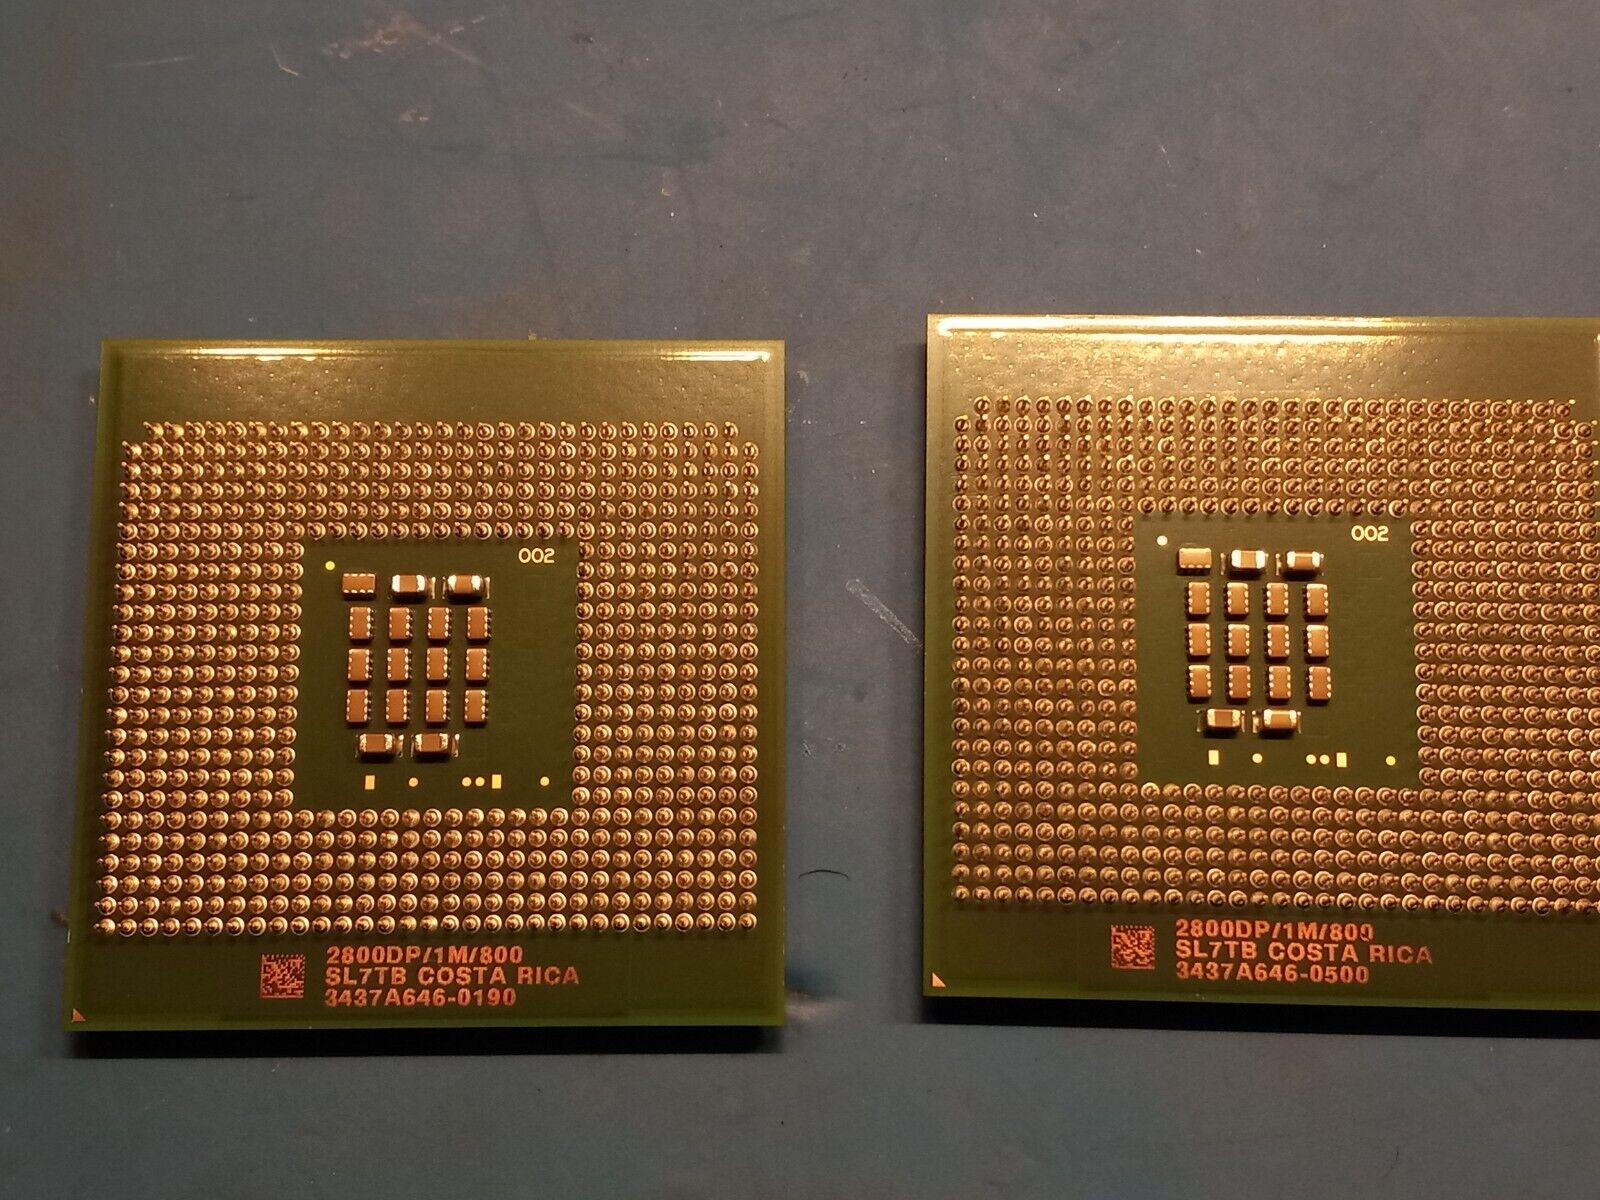 Intel Xeon Processors - Matched Set of 2 Server CPU